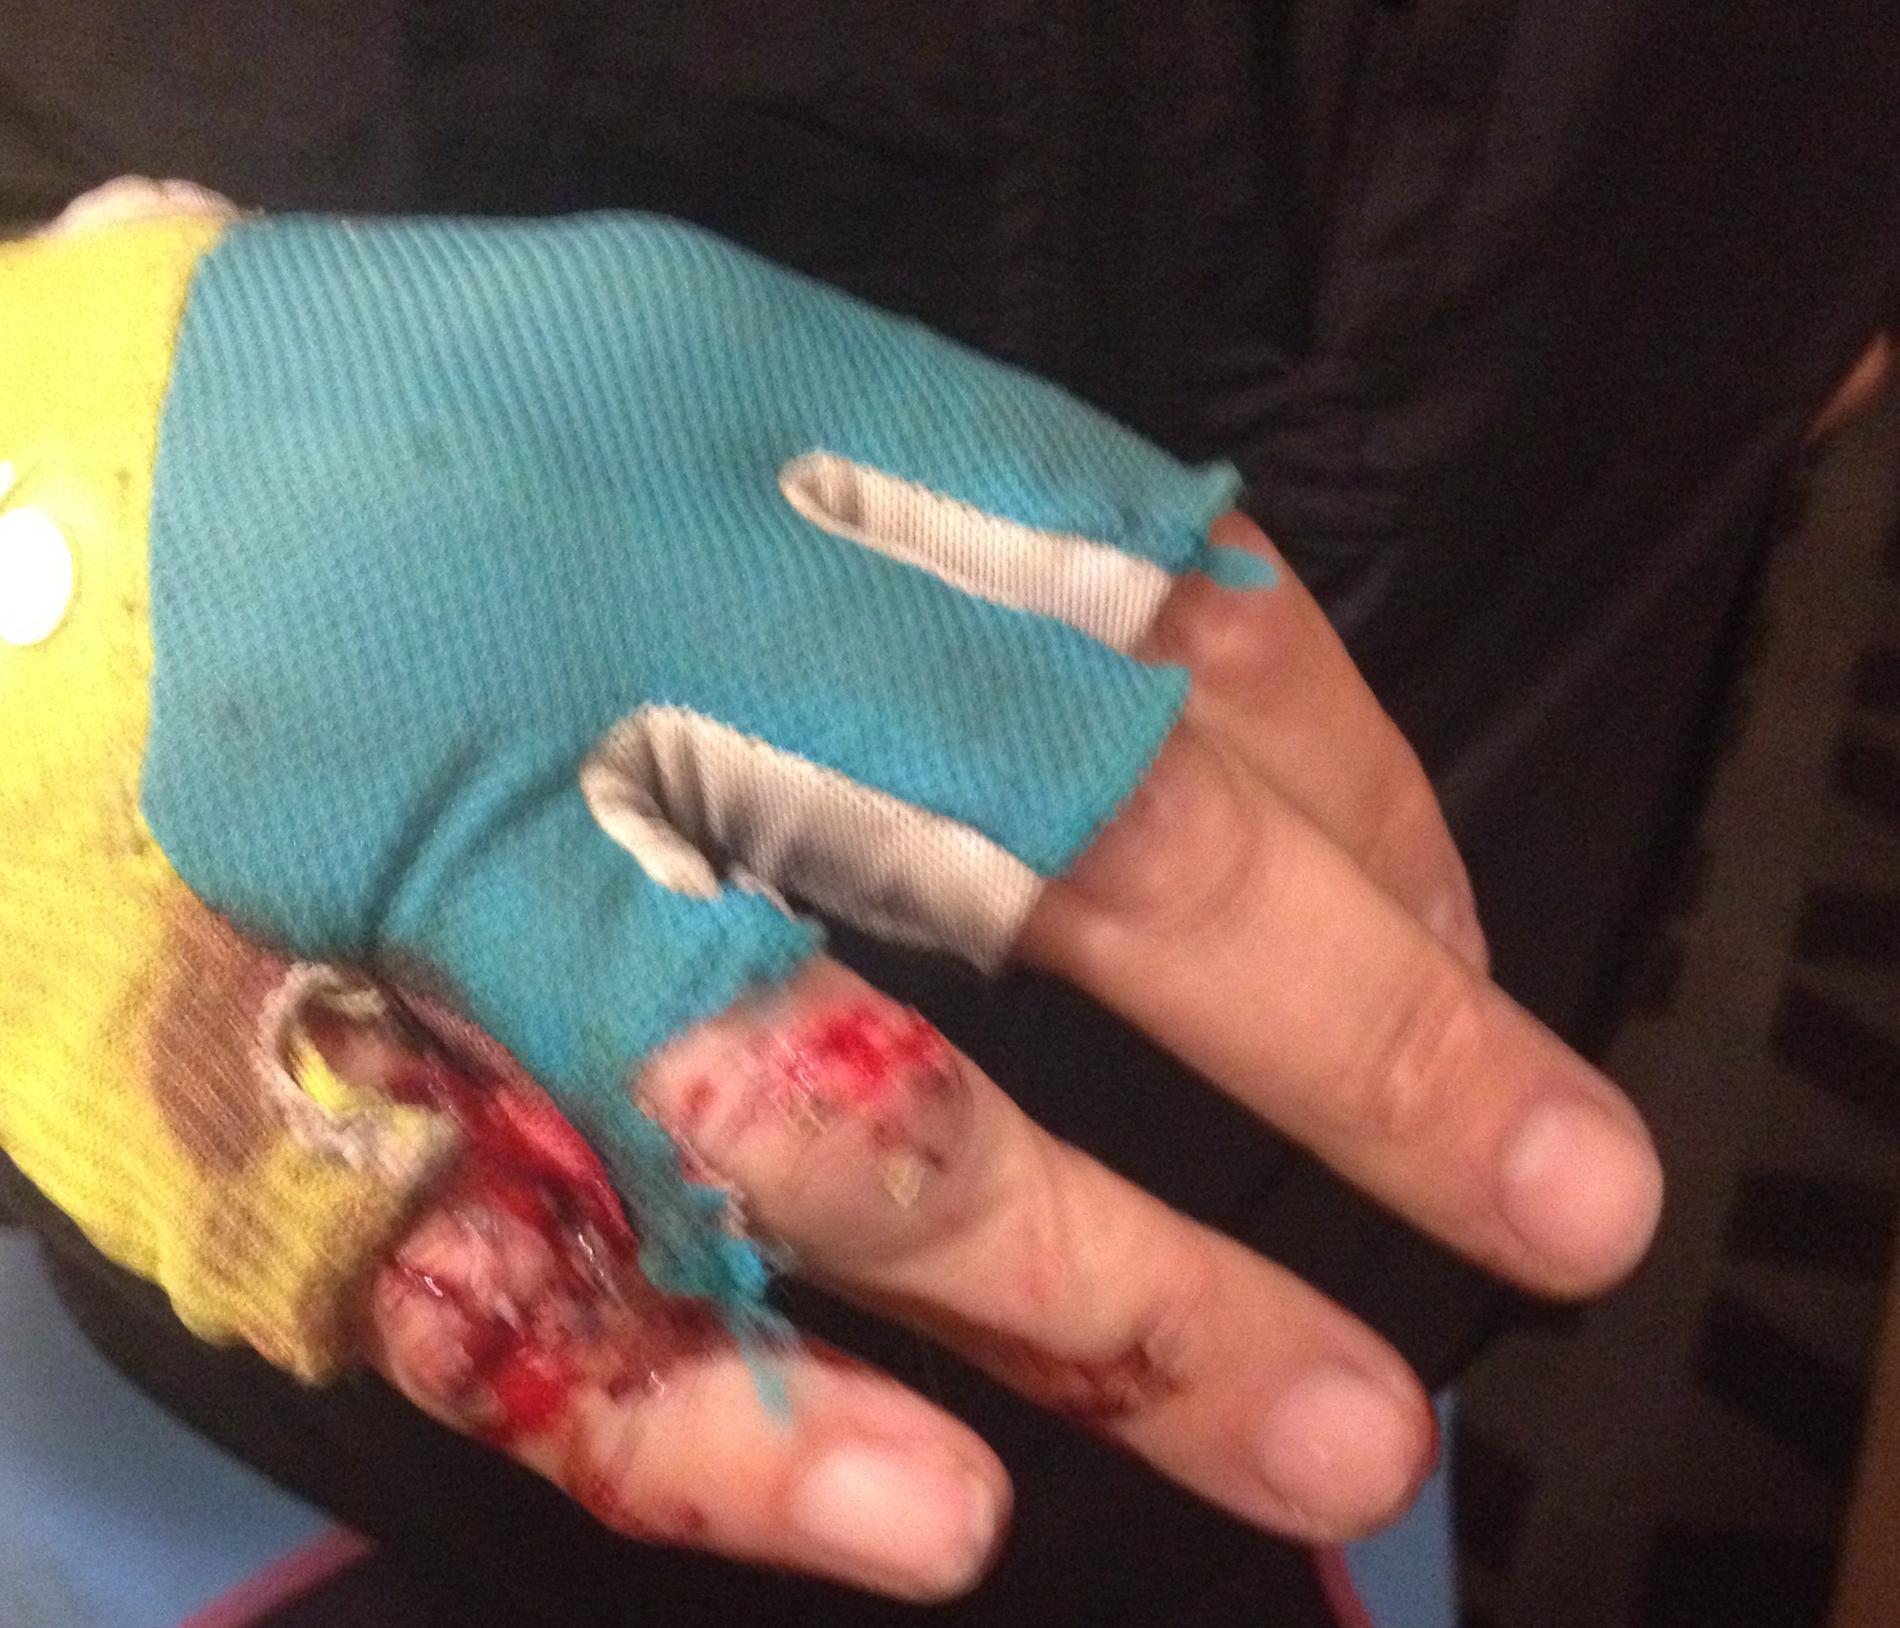 Möllers skadade hand.